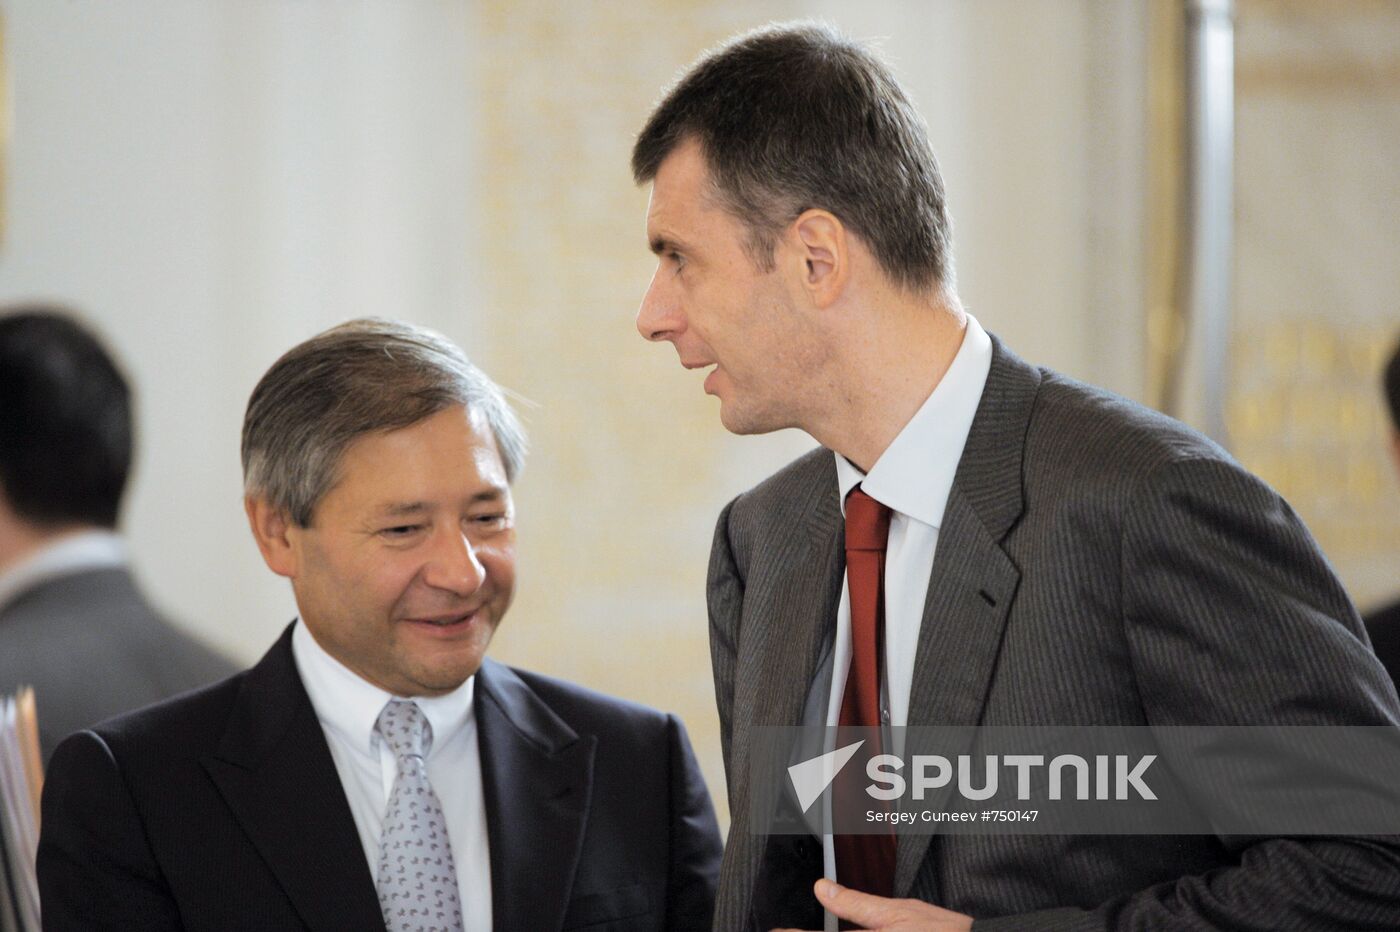 Leonid Reiman and Mikhail Prokhorov